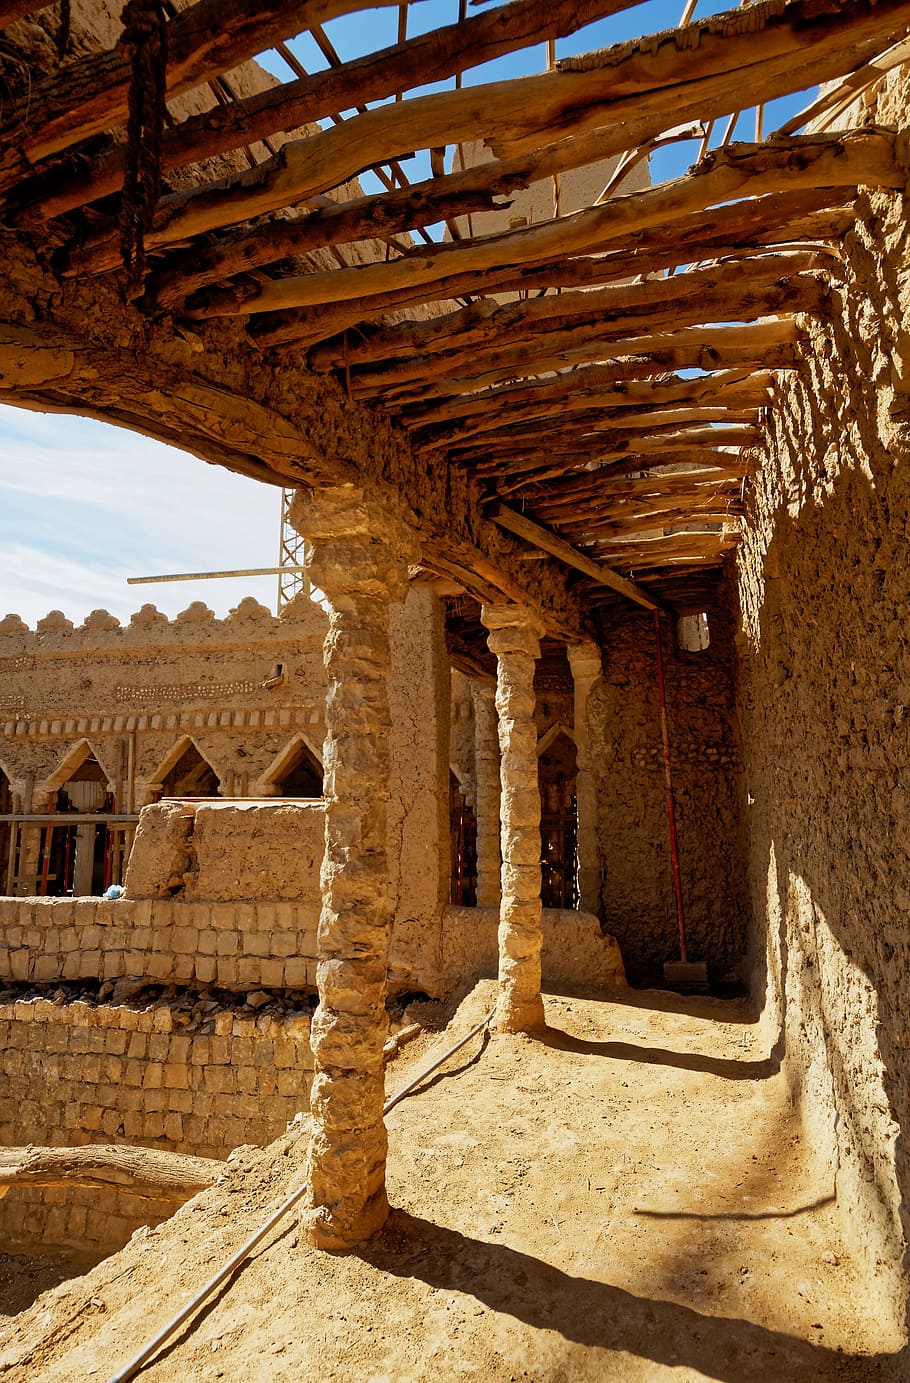 old, riyad, saudi arabia, historically, ruins, old town, building, architecture, masonry, break up